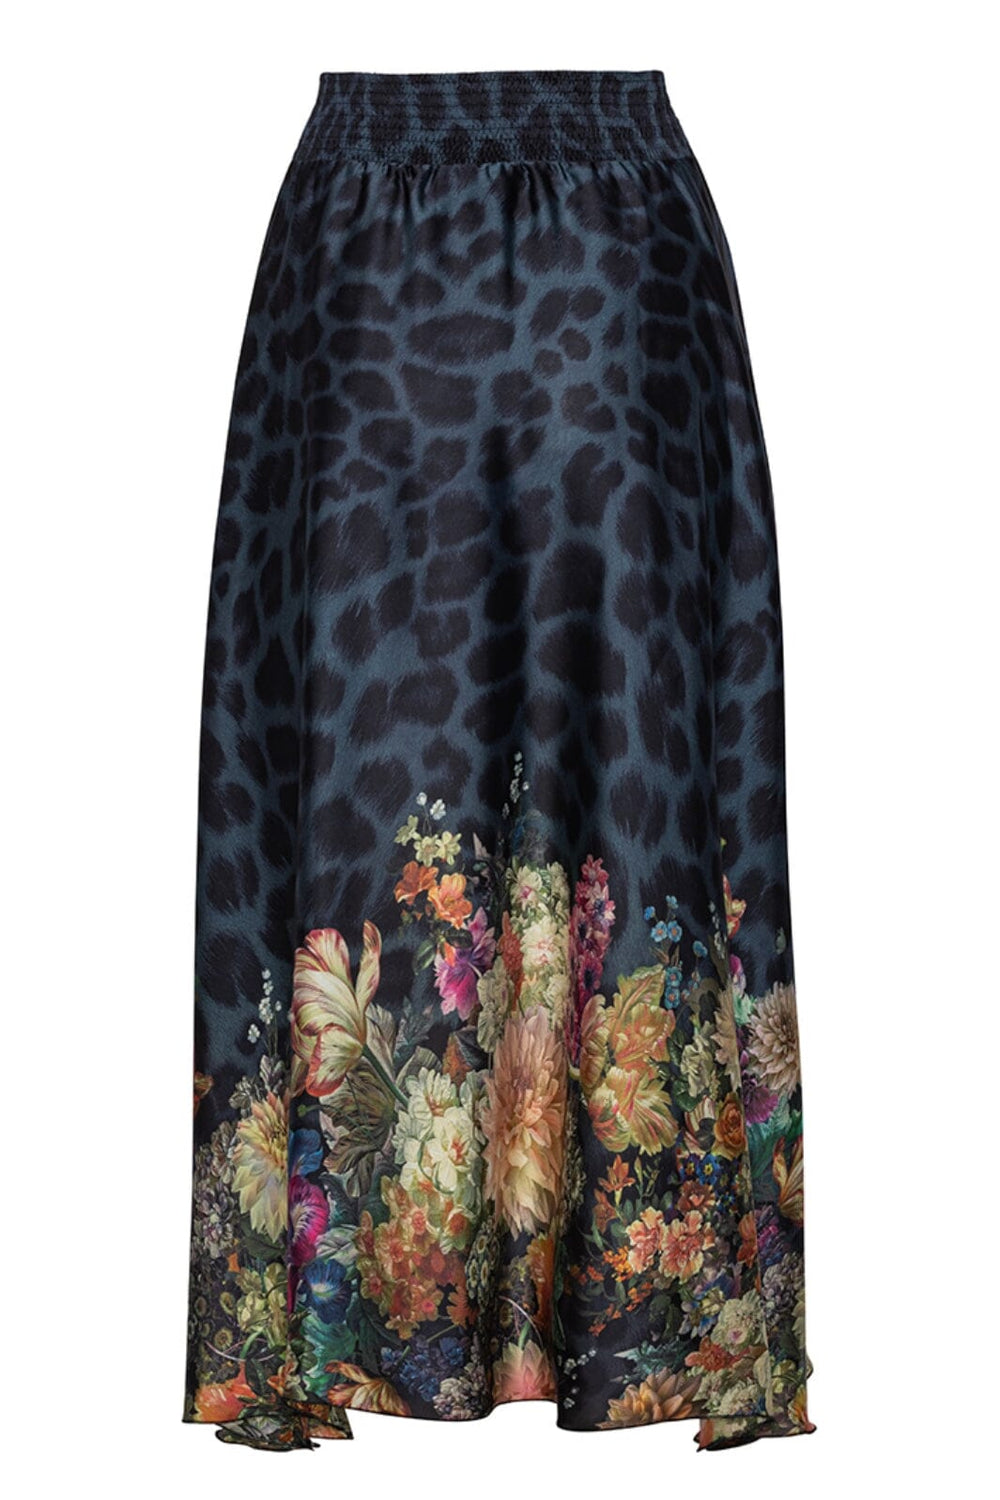 Karmamia - Savannah Skirt - Navy Flower Leopard Nederdele 